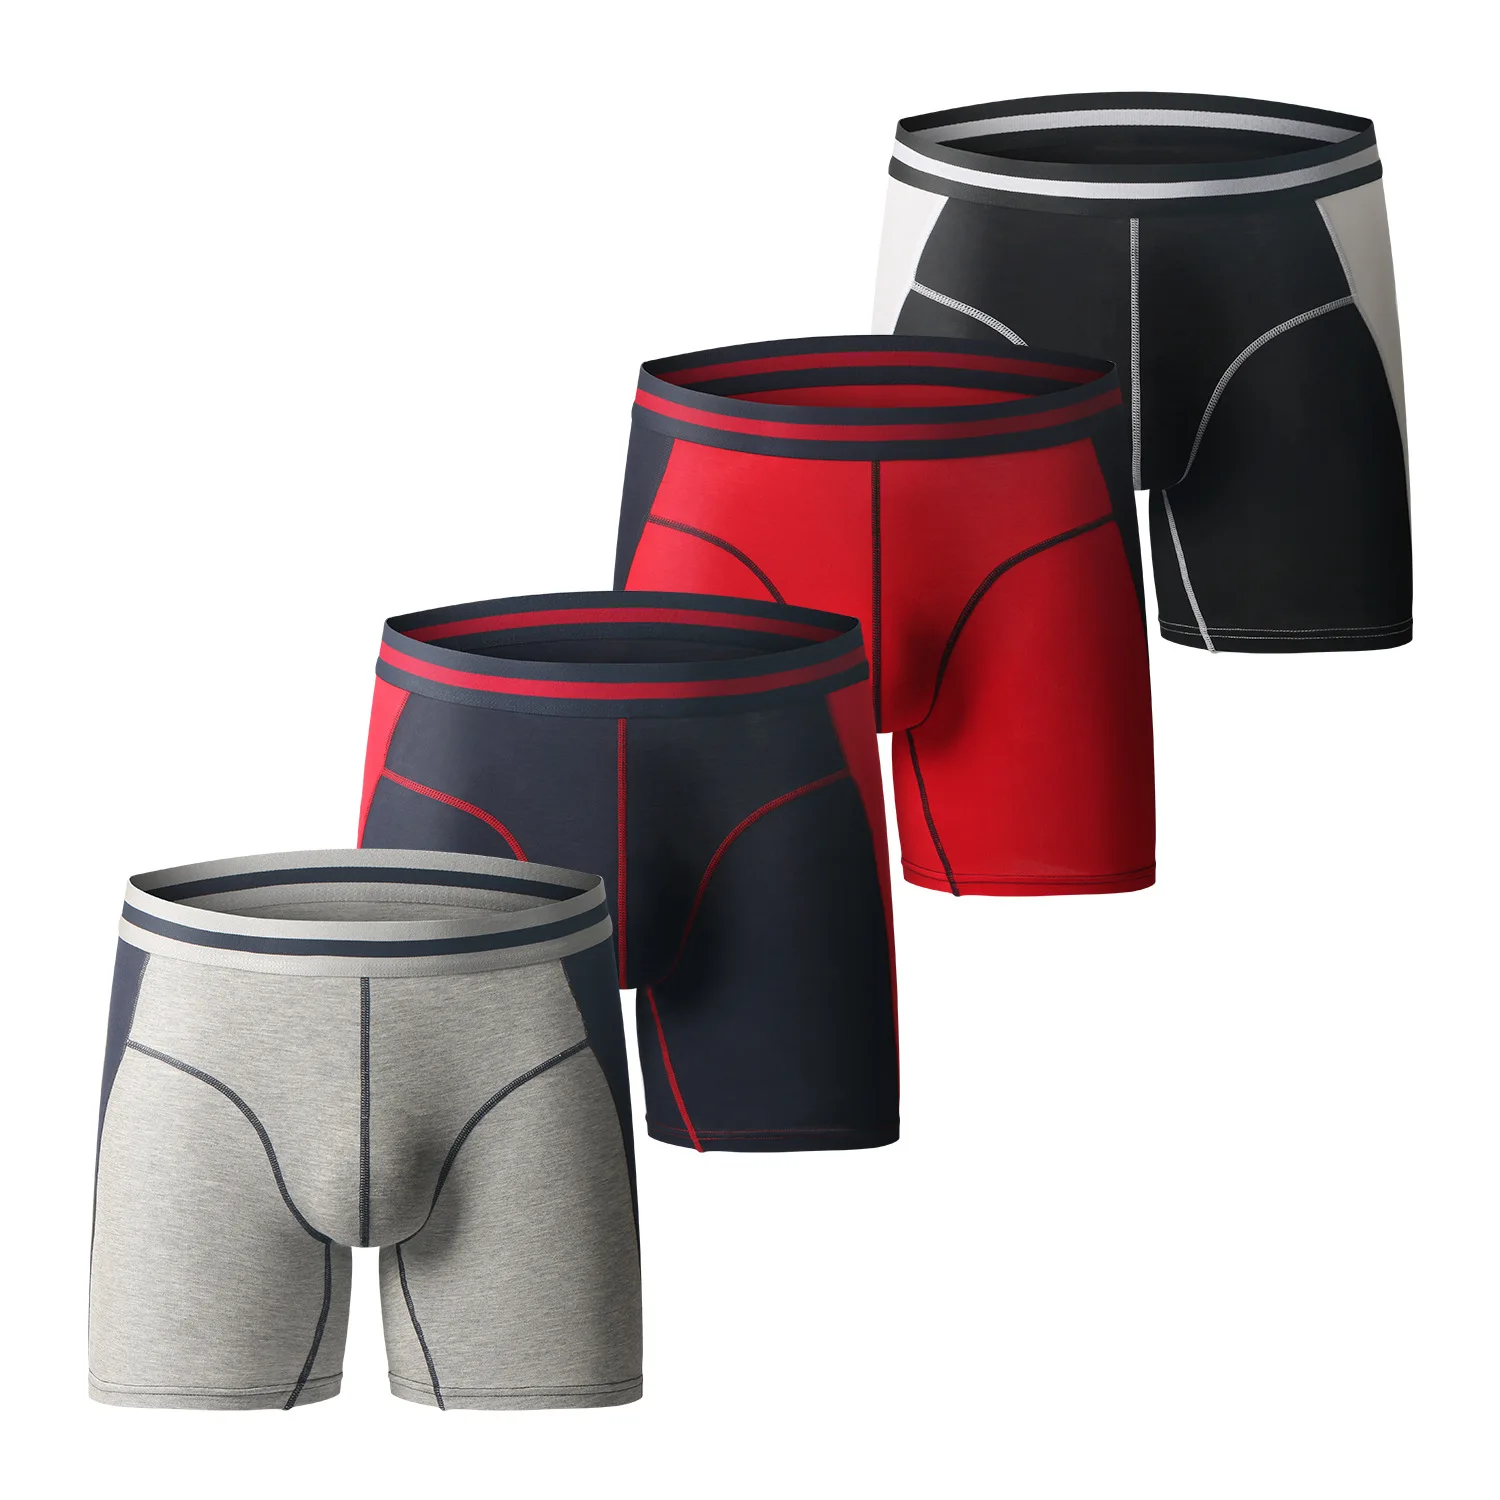 2021 Modal and Spandex comfort pouch custom logo men boxer briefs Men's underwear boxer brief boxer shorts, Black, red, light grey, dark blue